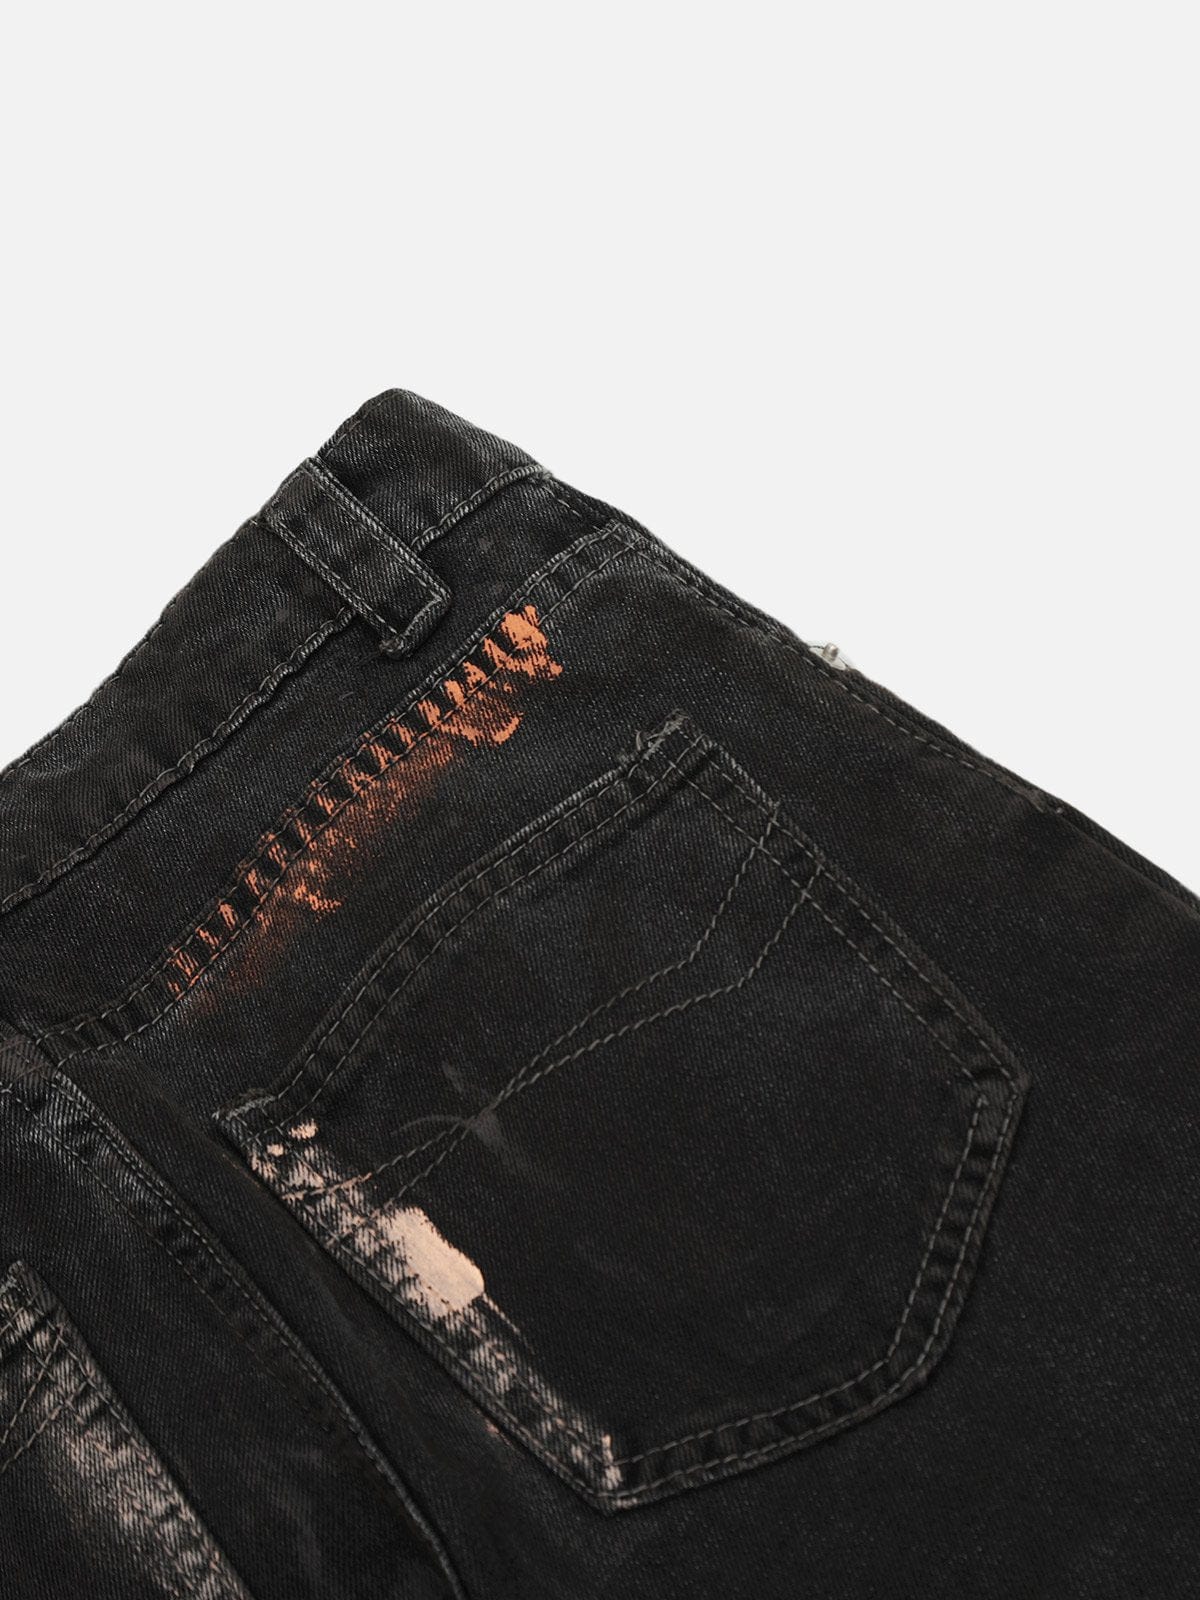 NEV Graffiti Bootcut Jeans